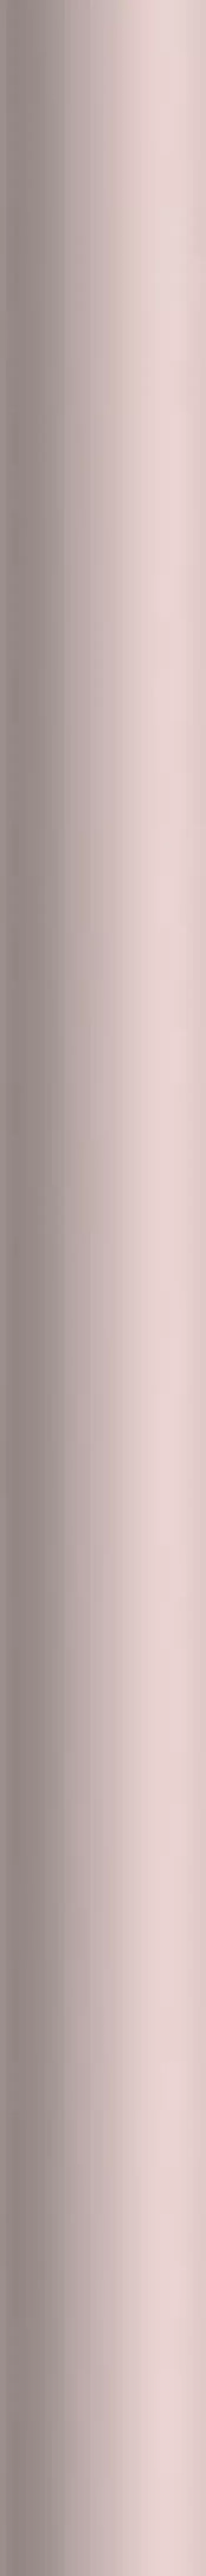 Meissen Бордюр Trendy карандаш розовый 1.6х25 A-TY1C071/N